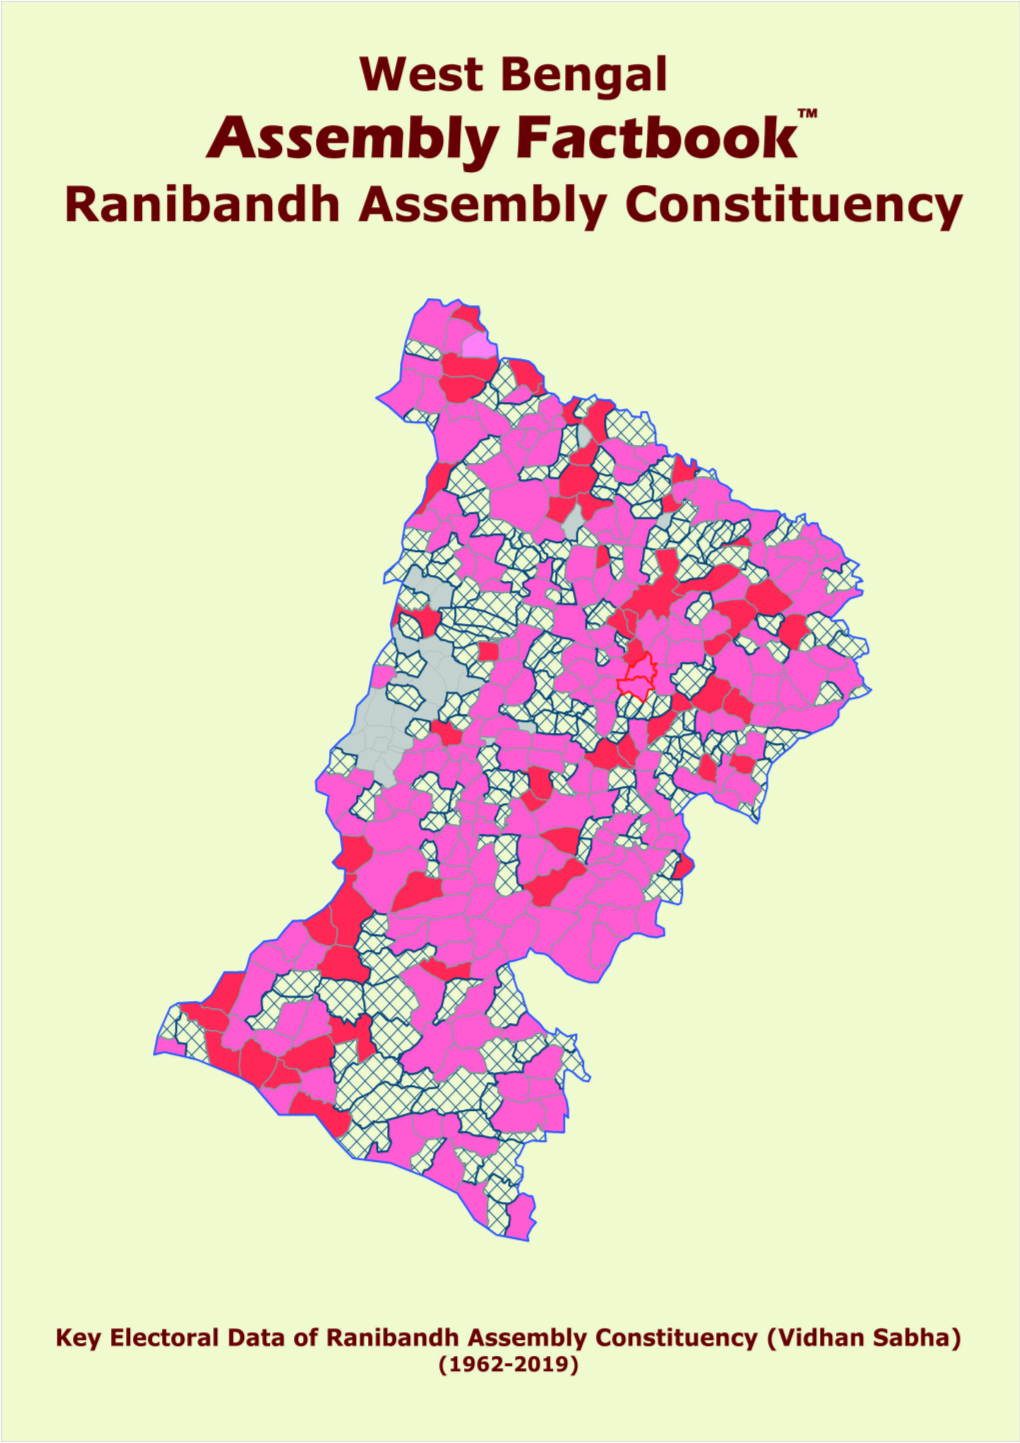 Ranibandh Assembly West Bengal Factbook